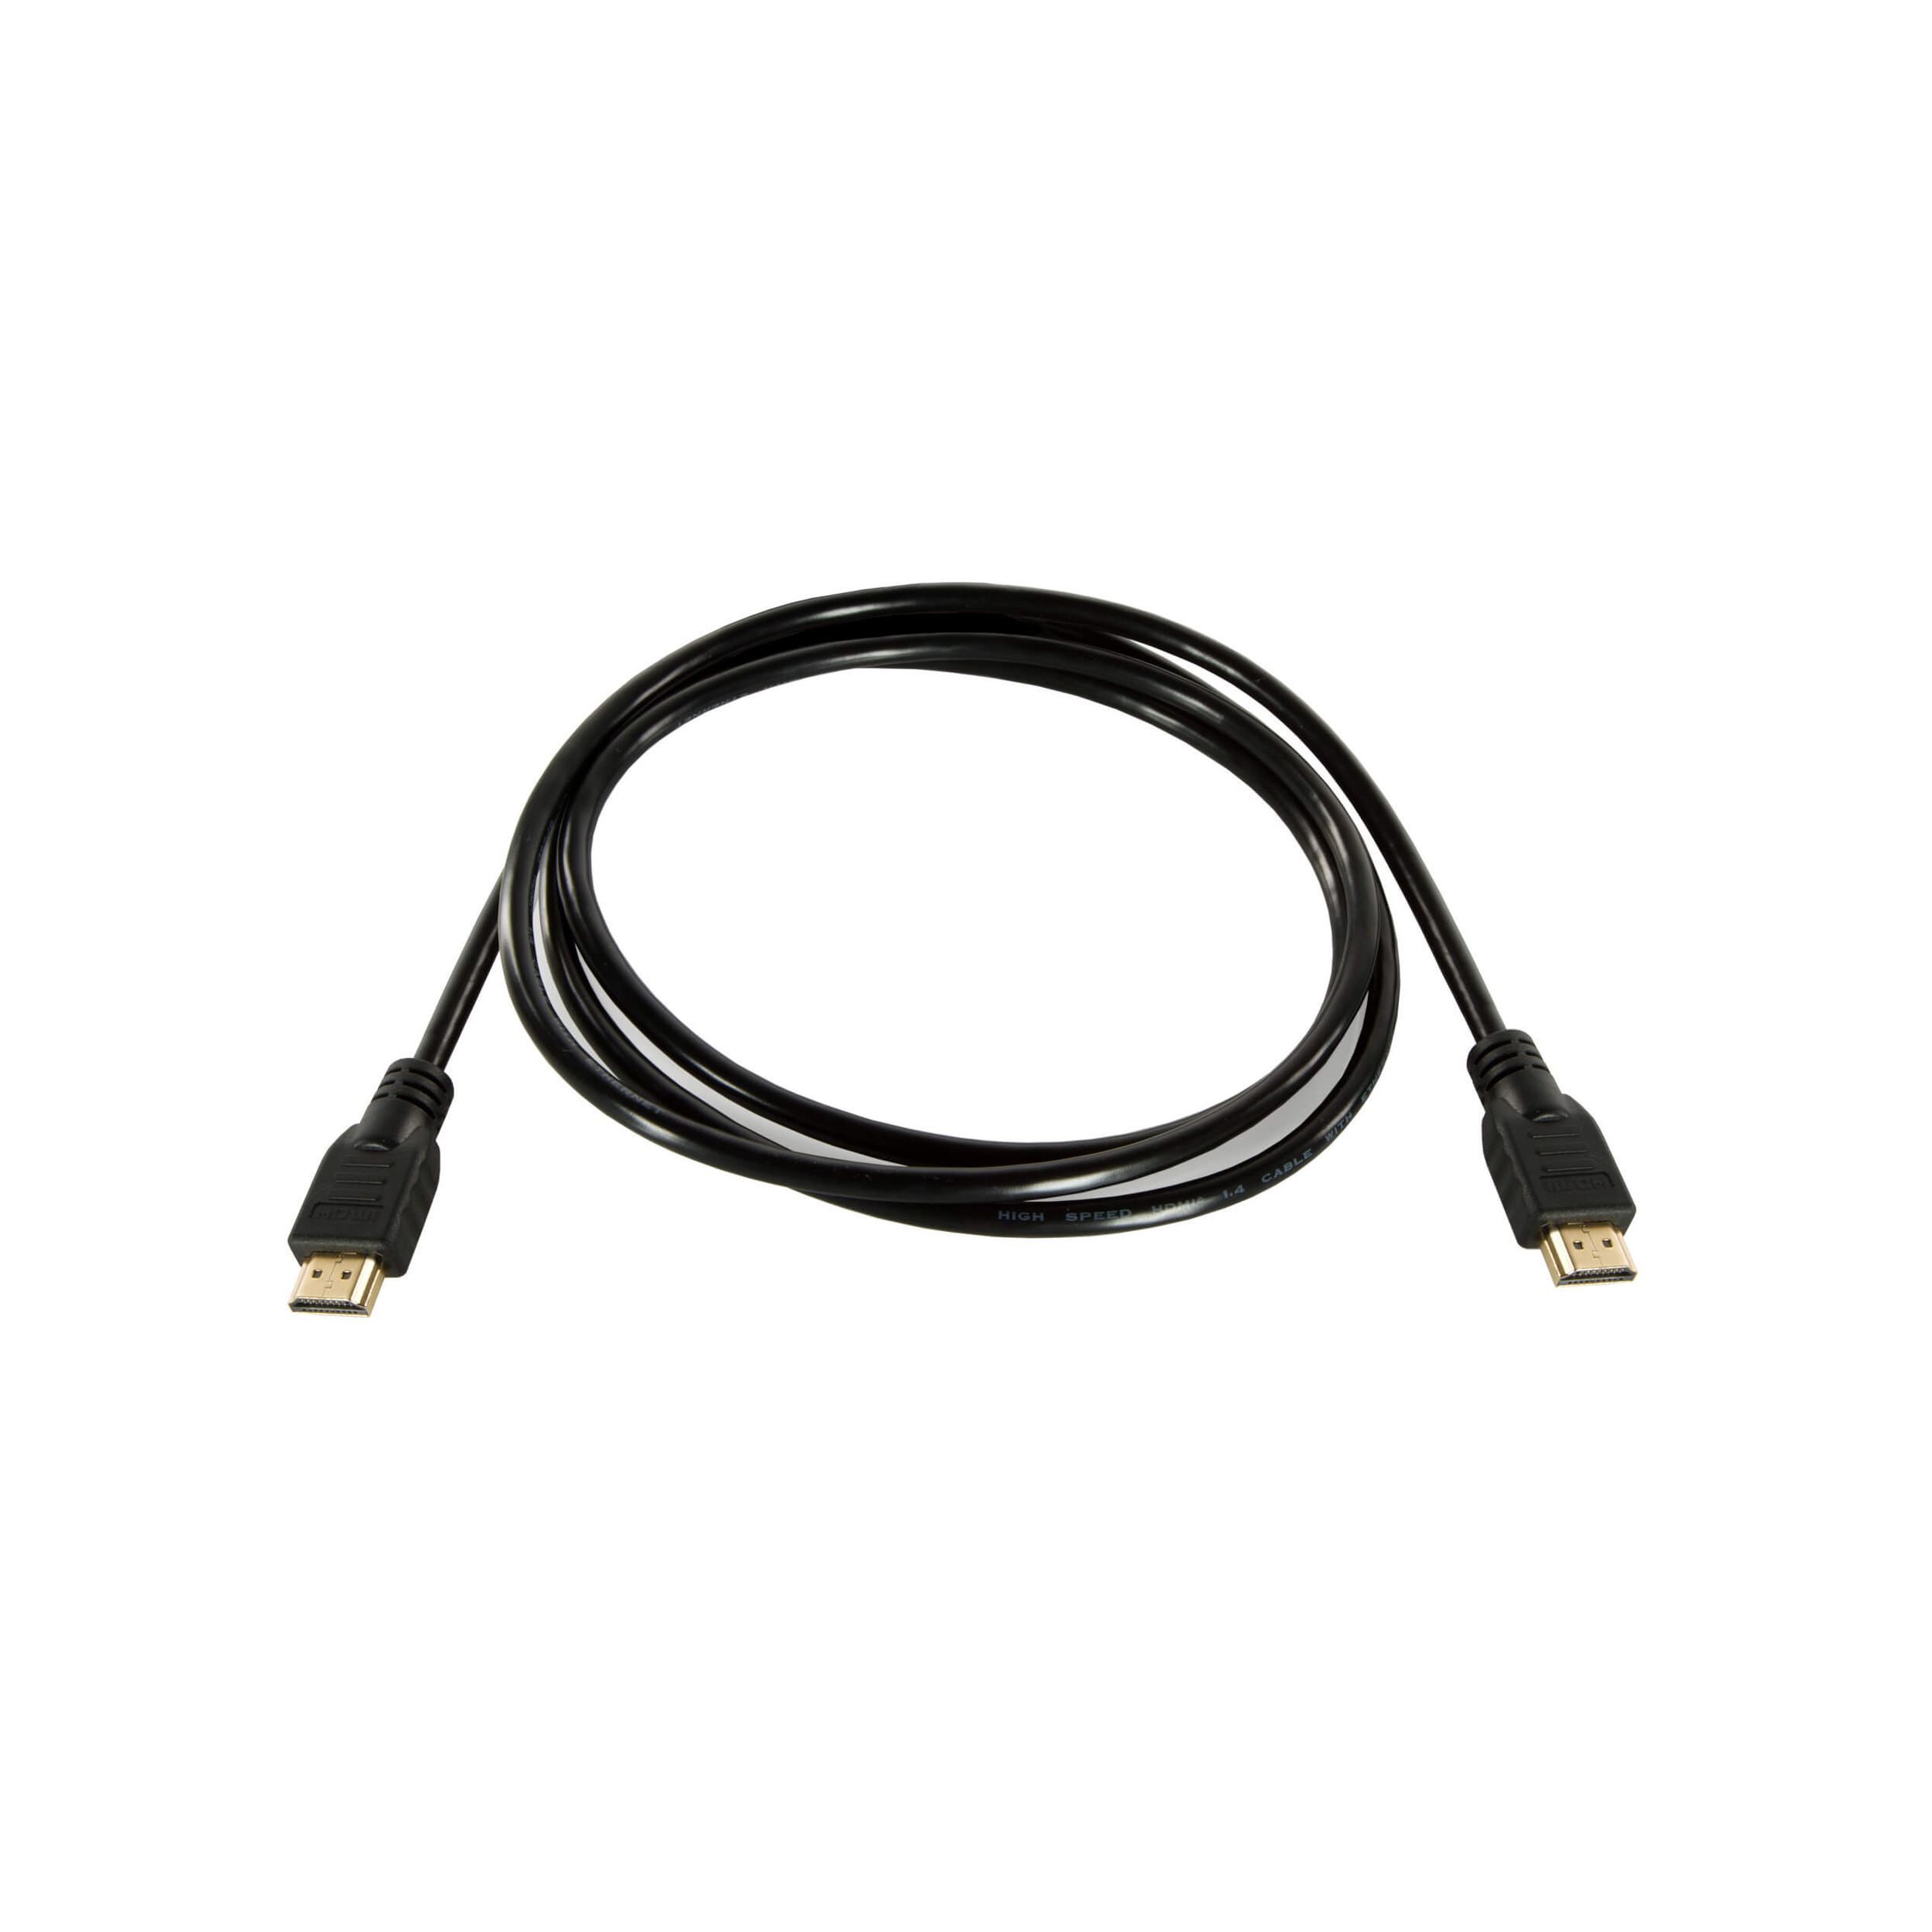 Formez un câble HDMI à grande vitesse (5 ')